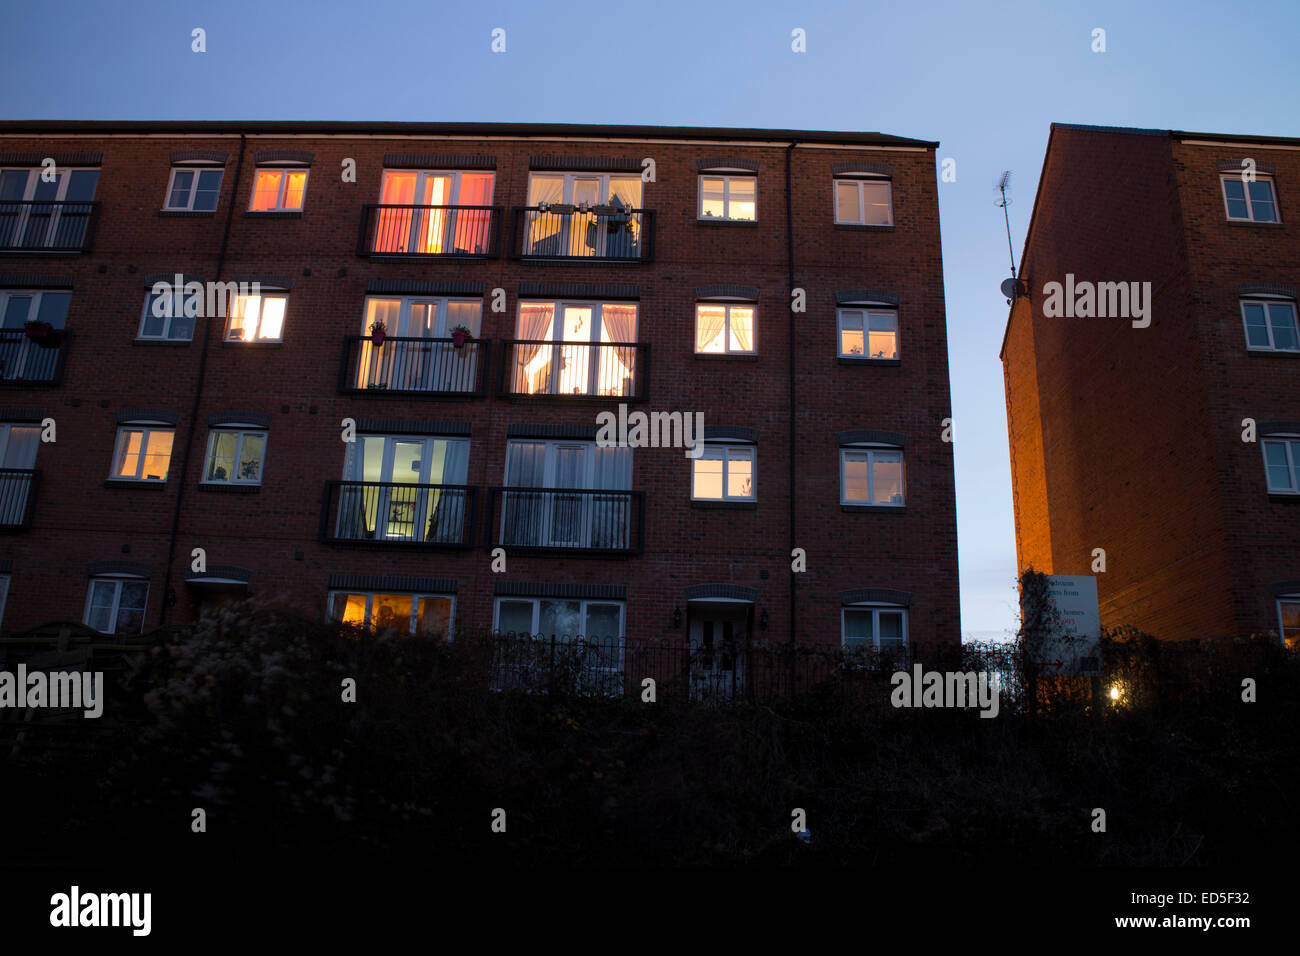 Blocks of flats at night, Warwick, UK Stock Photo